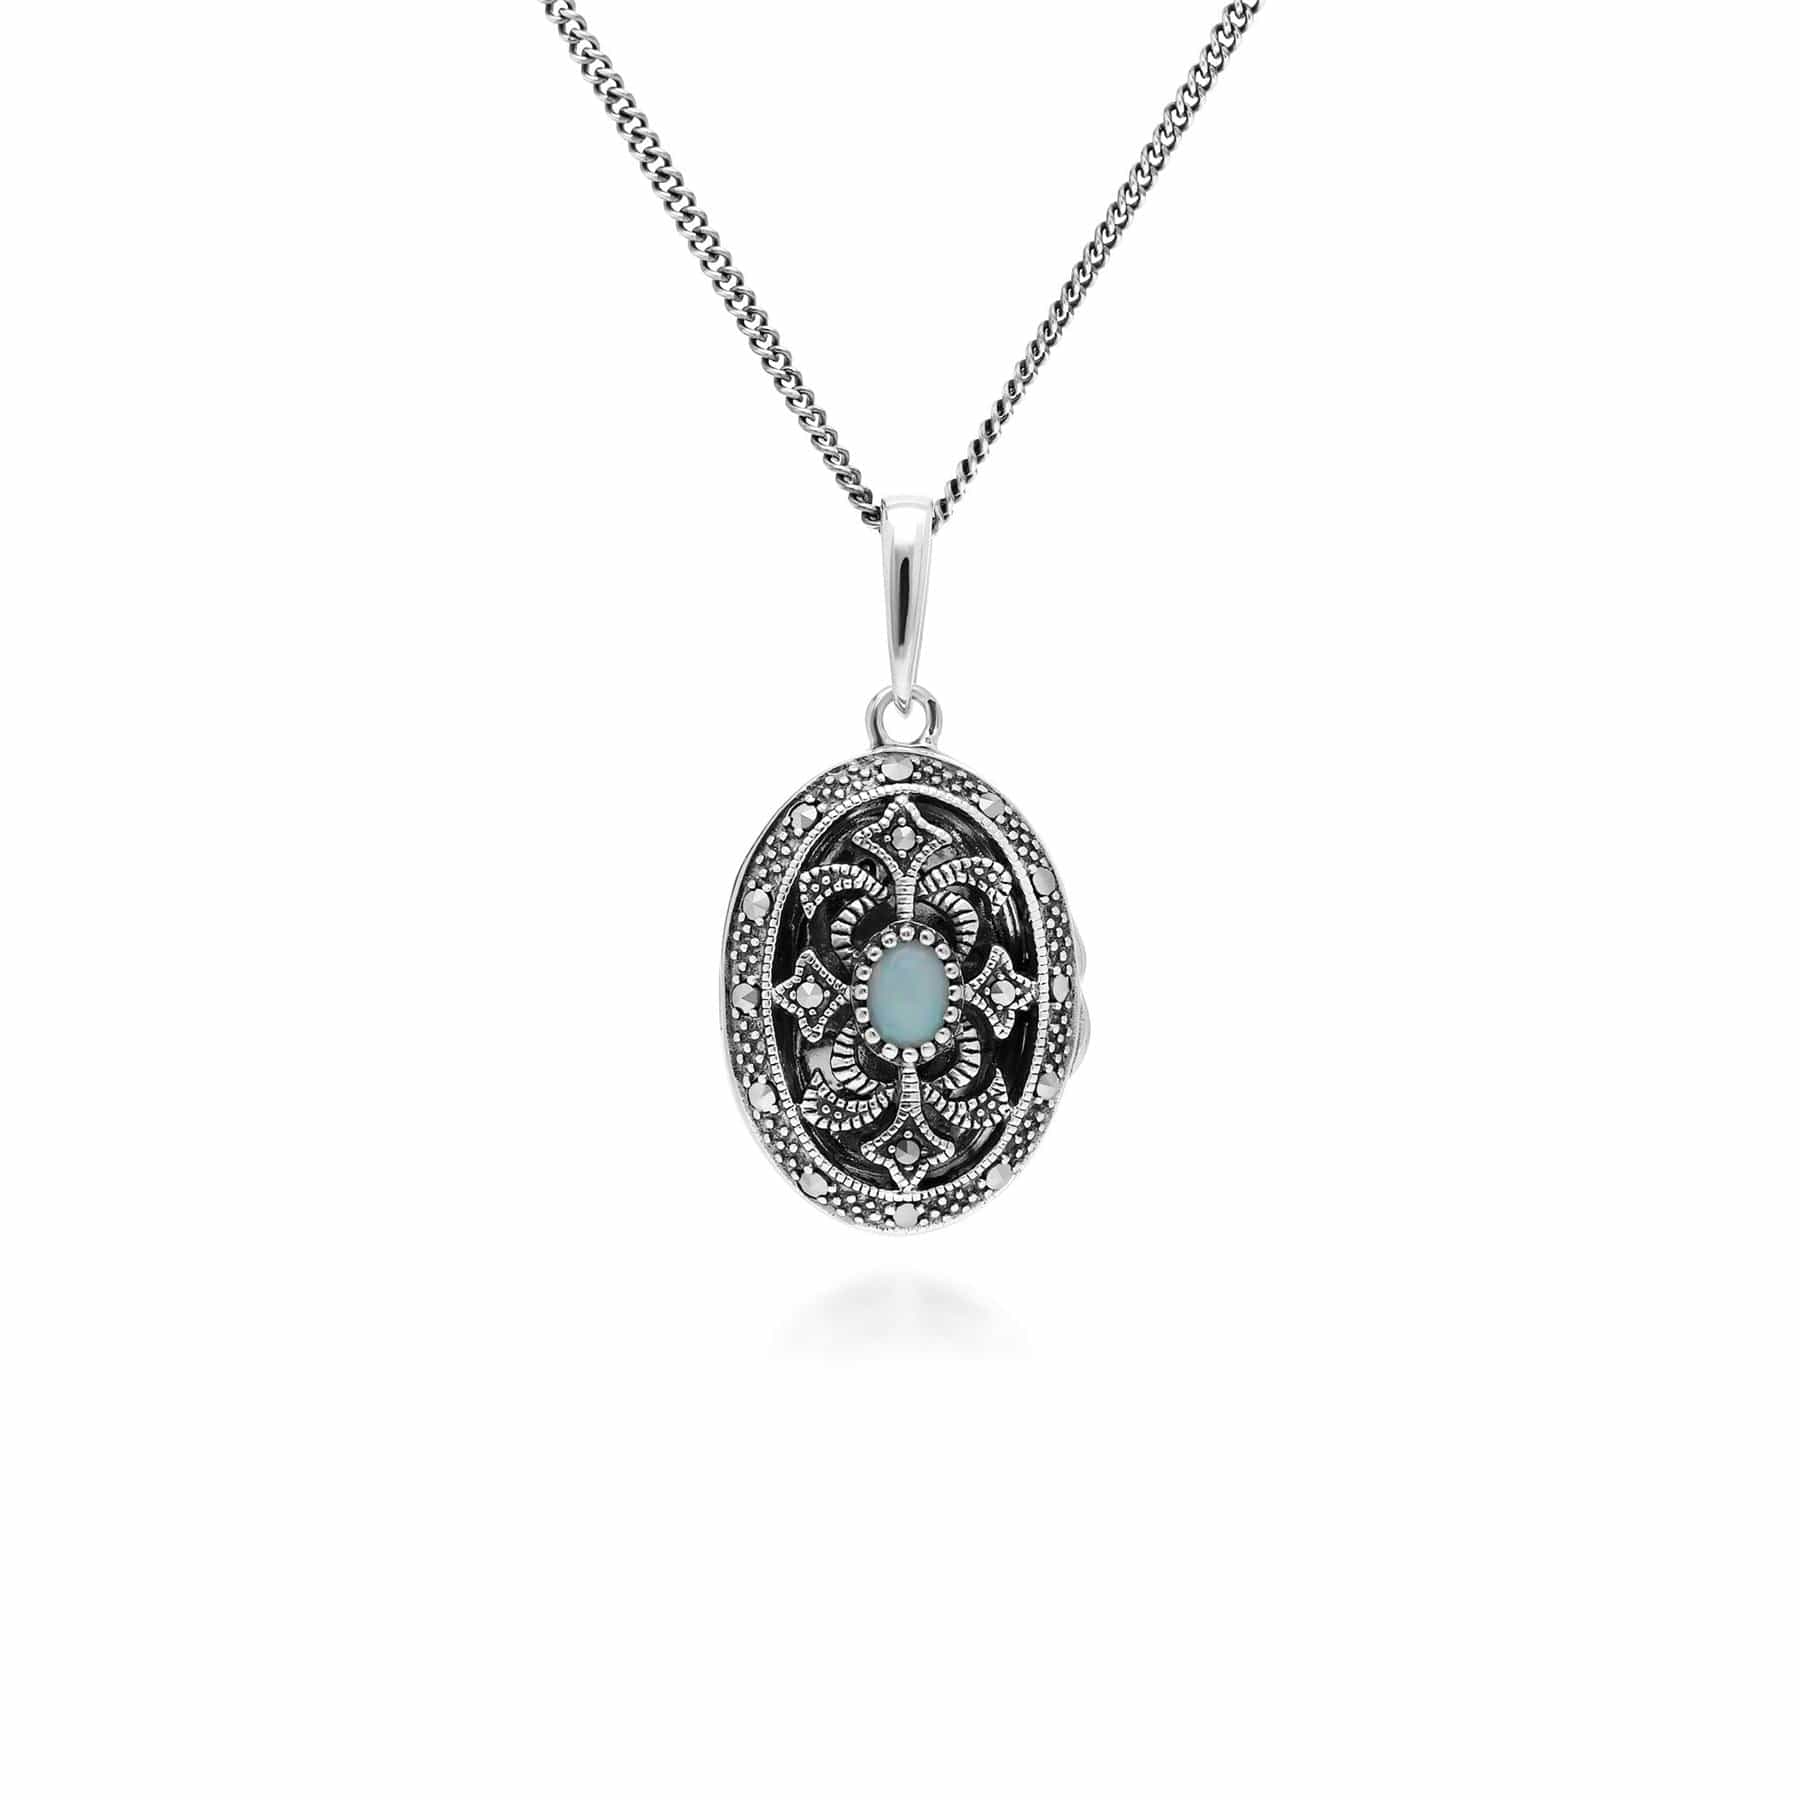 Art Nouveau Style Oval Opal & Marcasite Locket Necklace in 925 Sterling Silver - Gemondo